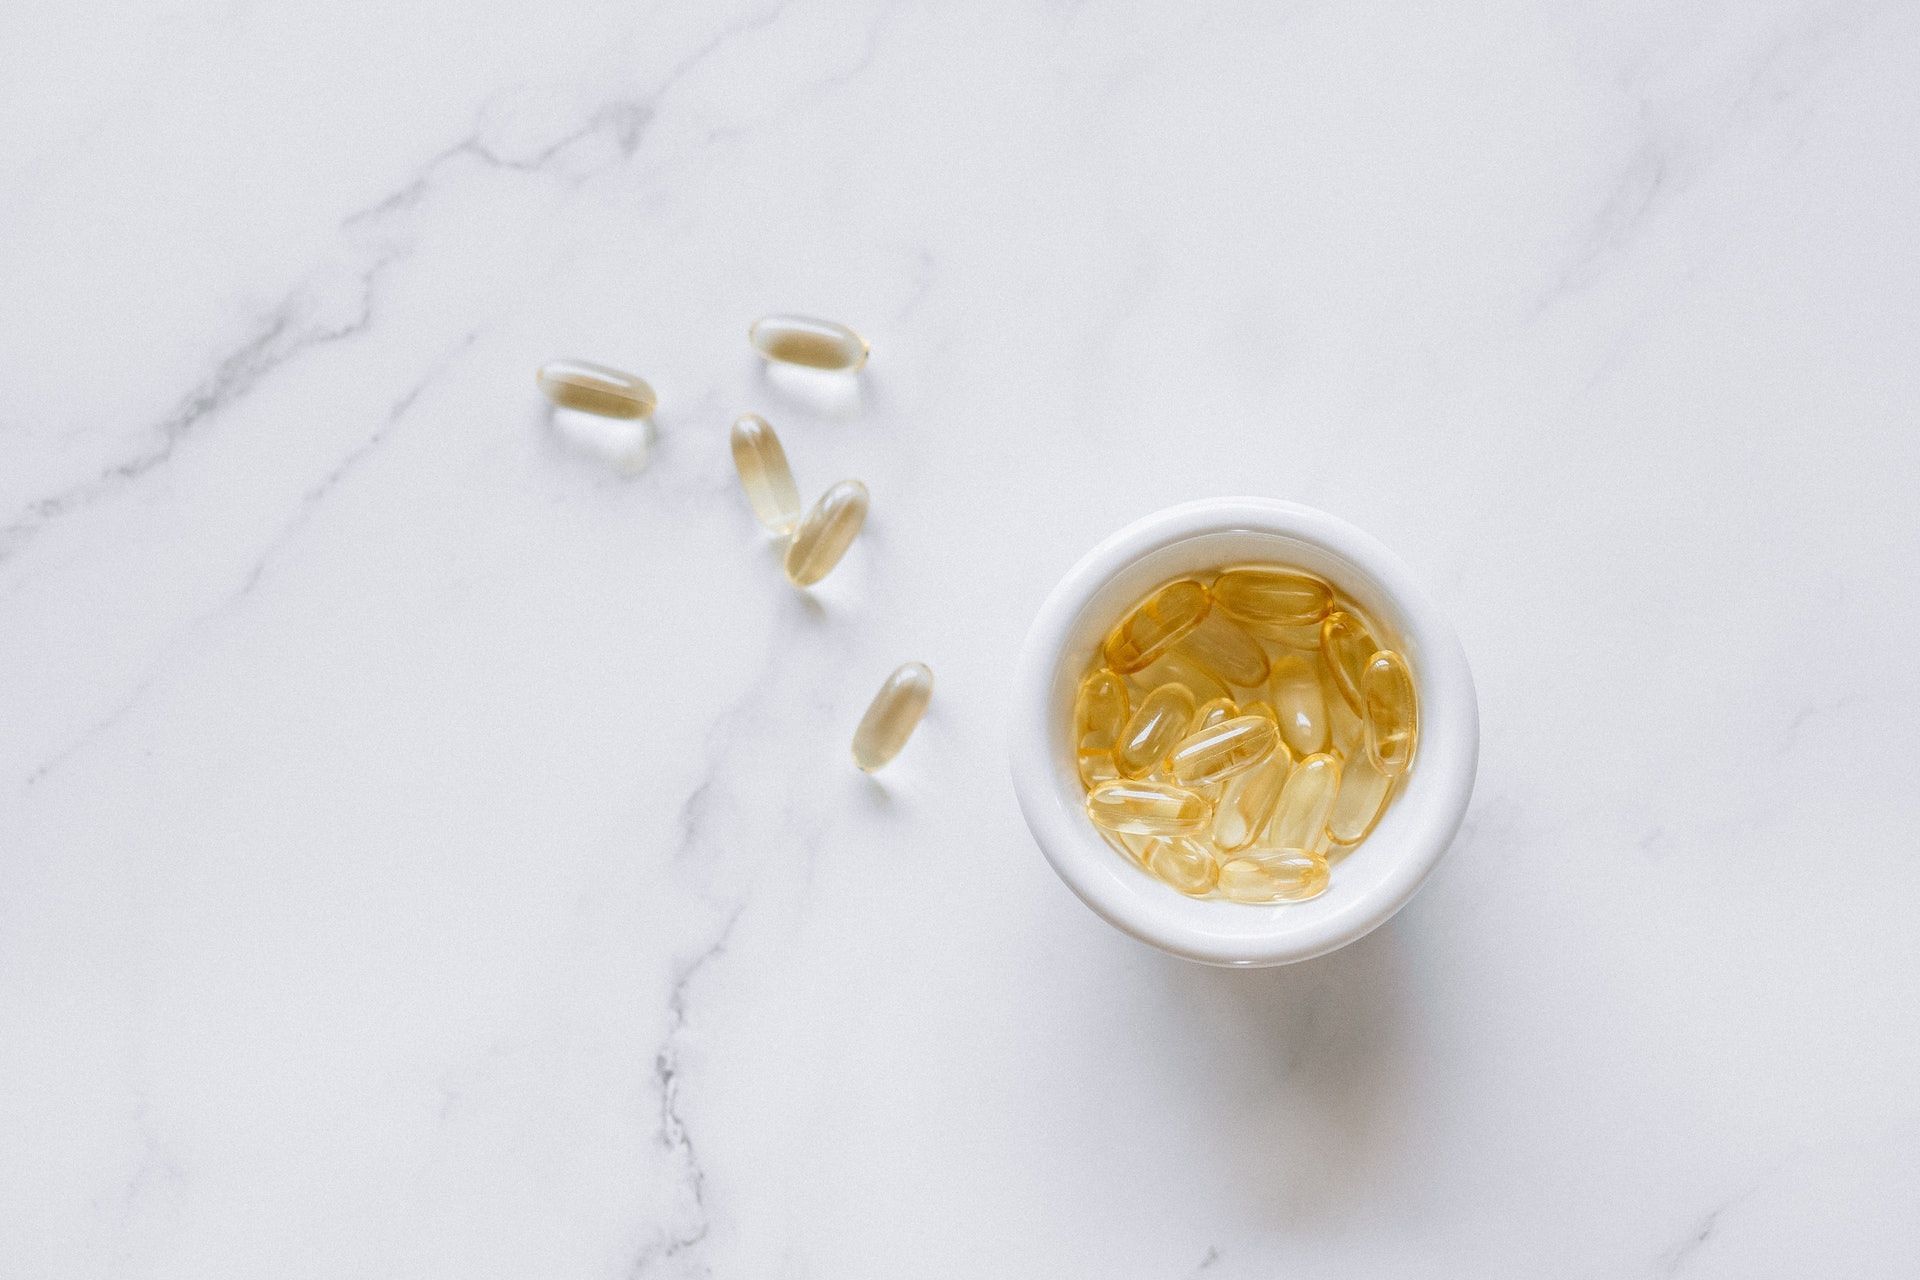 Pumpkin oil can be taken as a supplement. (Photo via Pexels/Nataliya Vaitkevich)